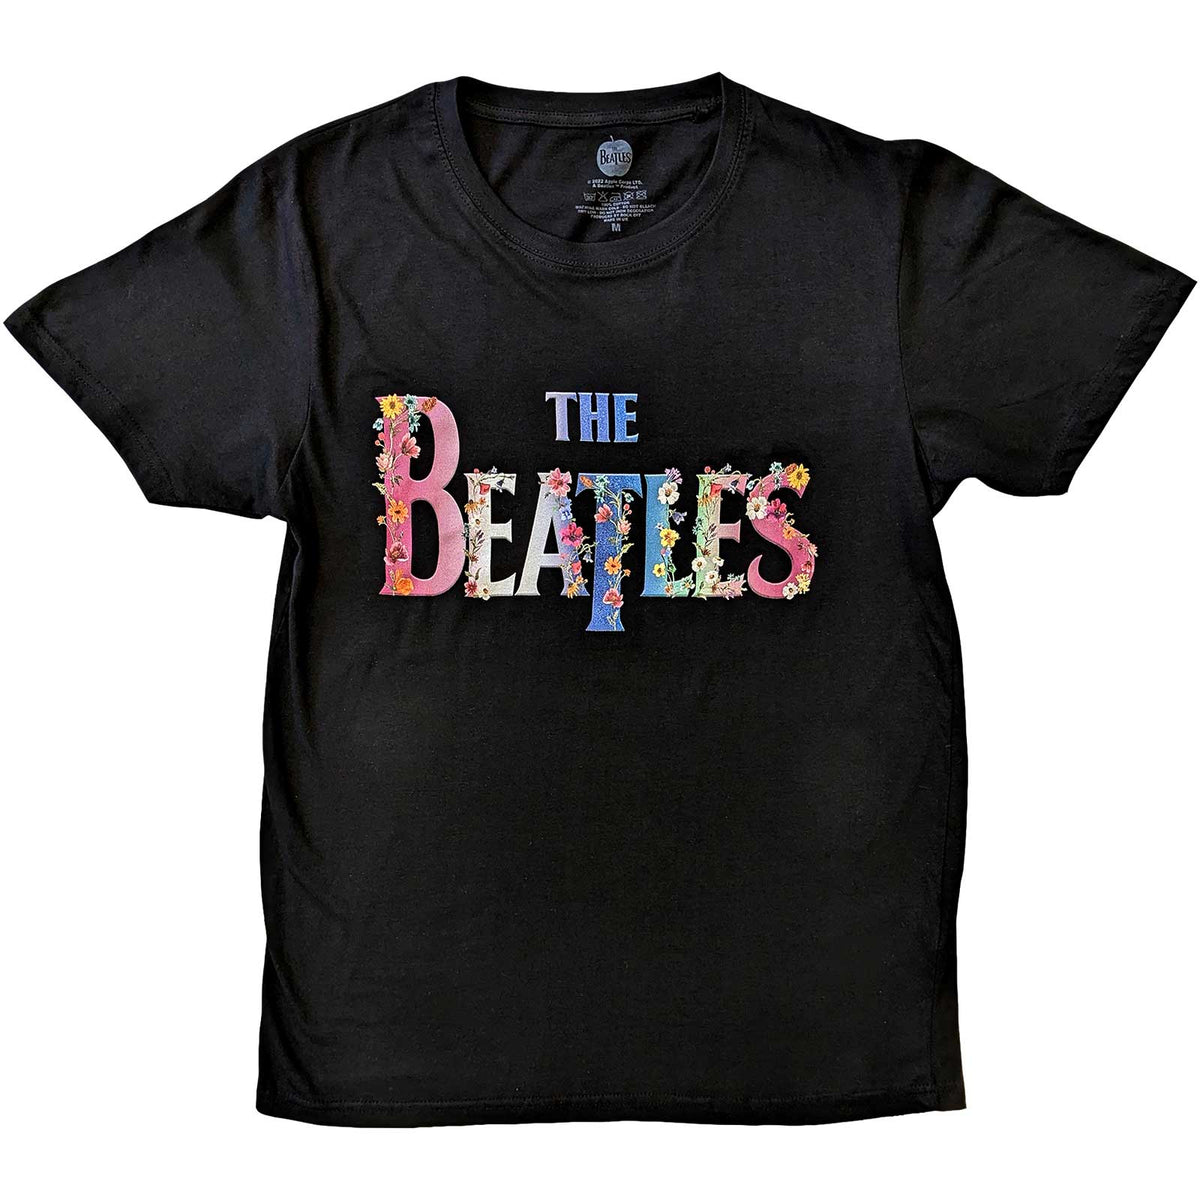 The Beatles T-Shirt - Floral Logo - Unisex Official Licensed Design